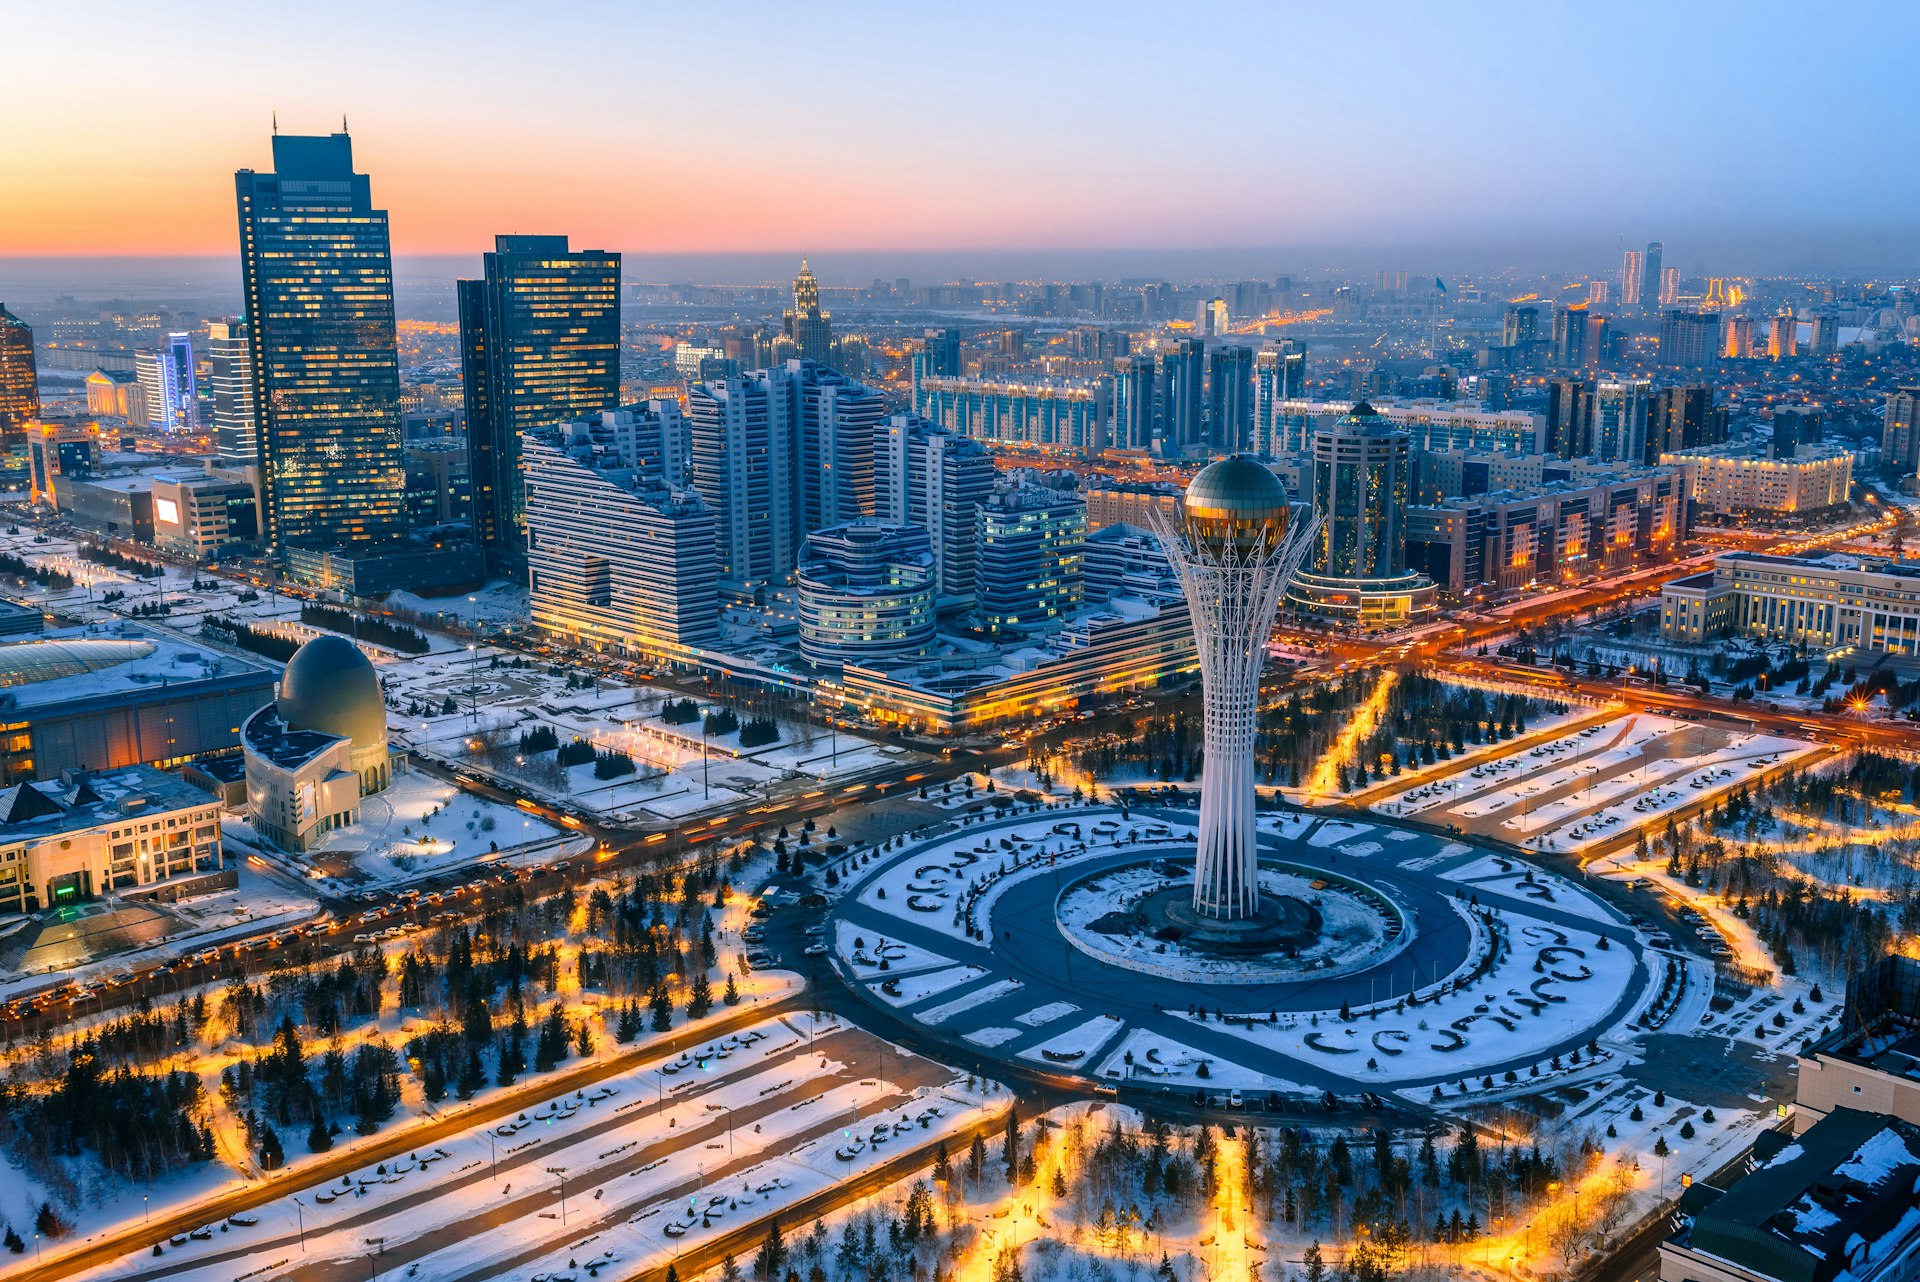 An aerial view of Astana in Kazakhstan